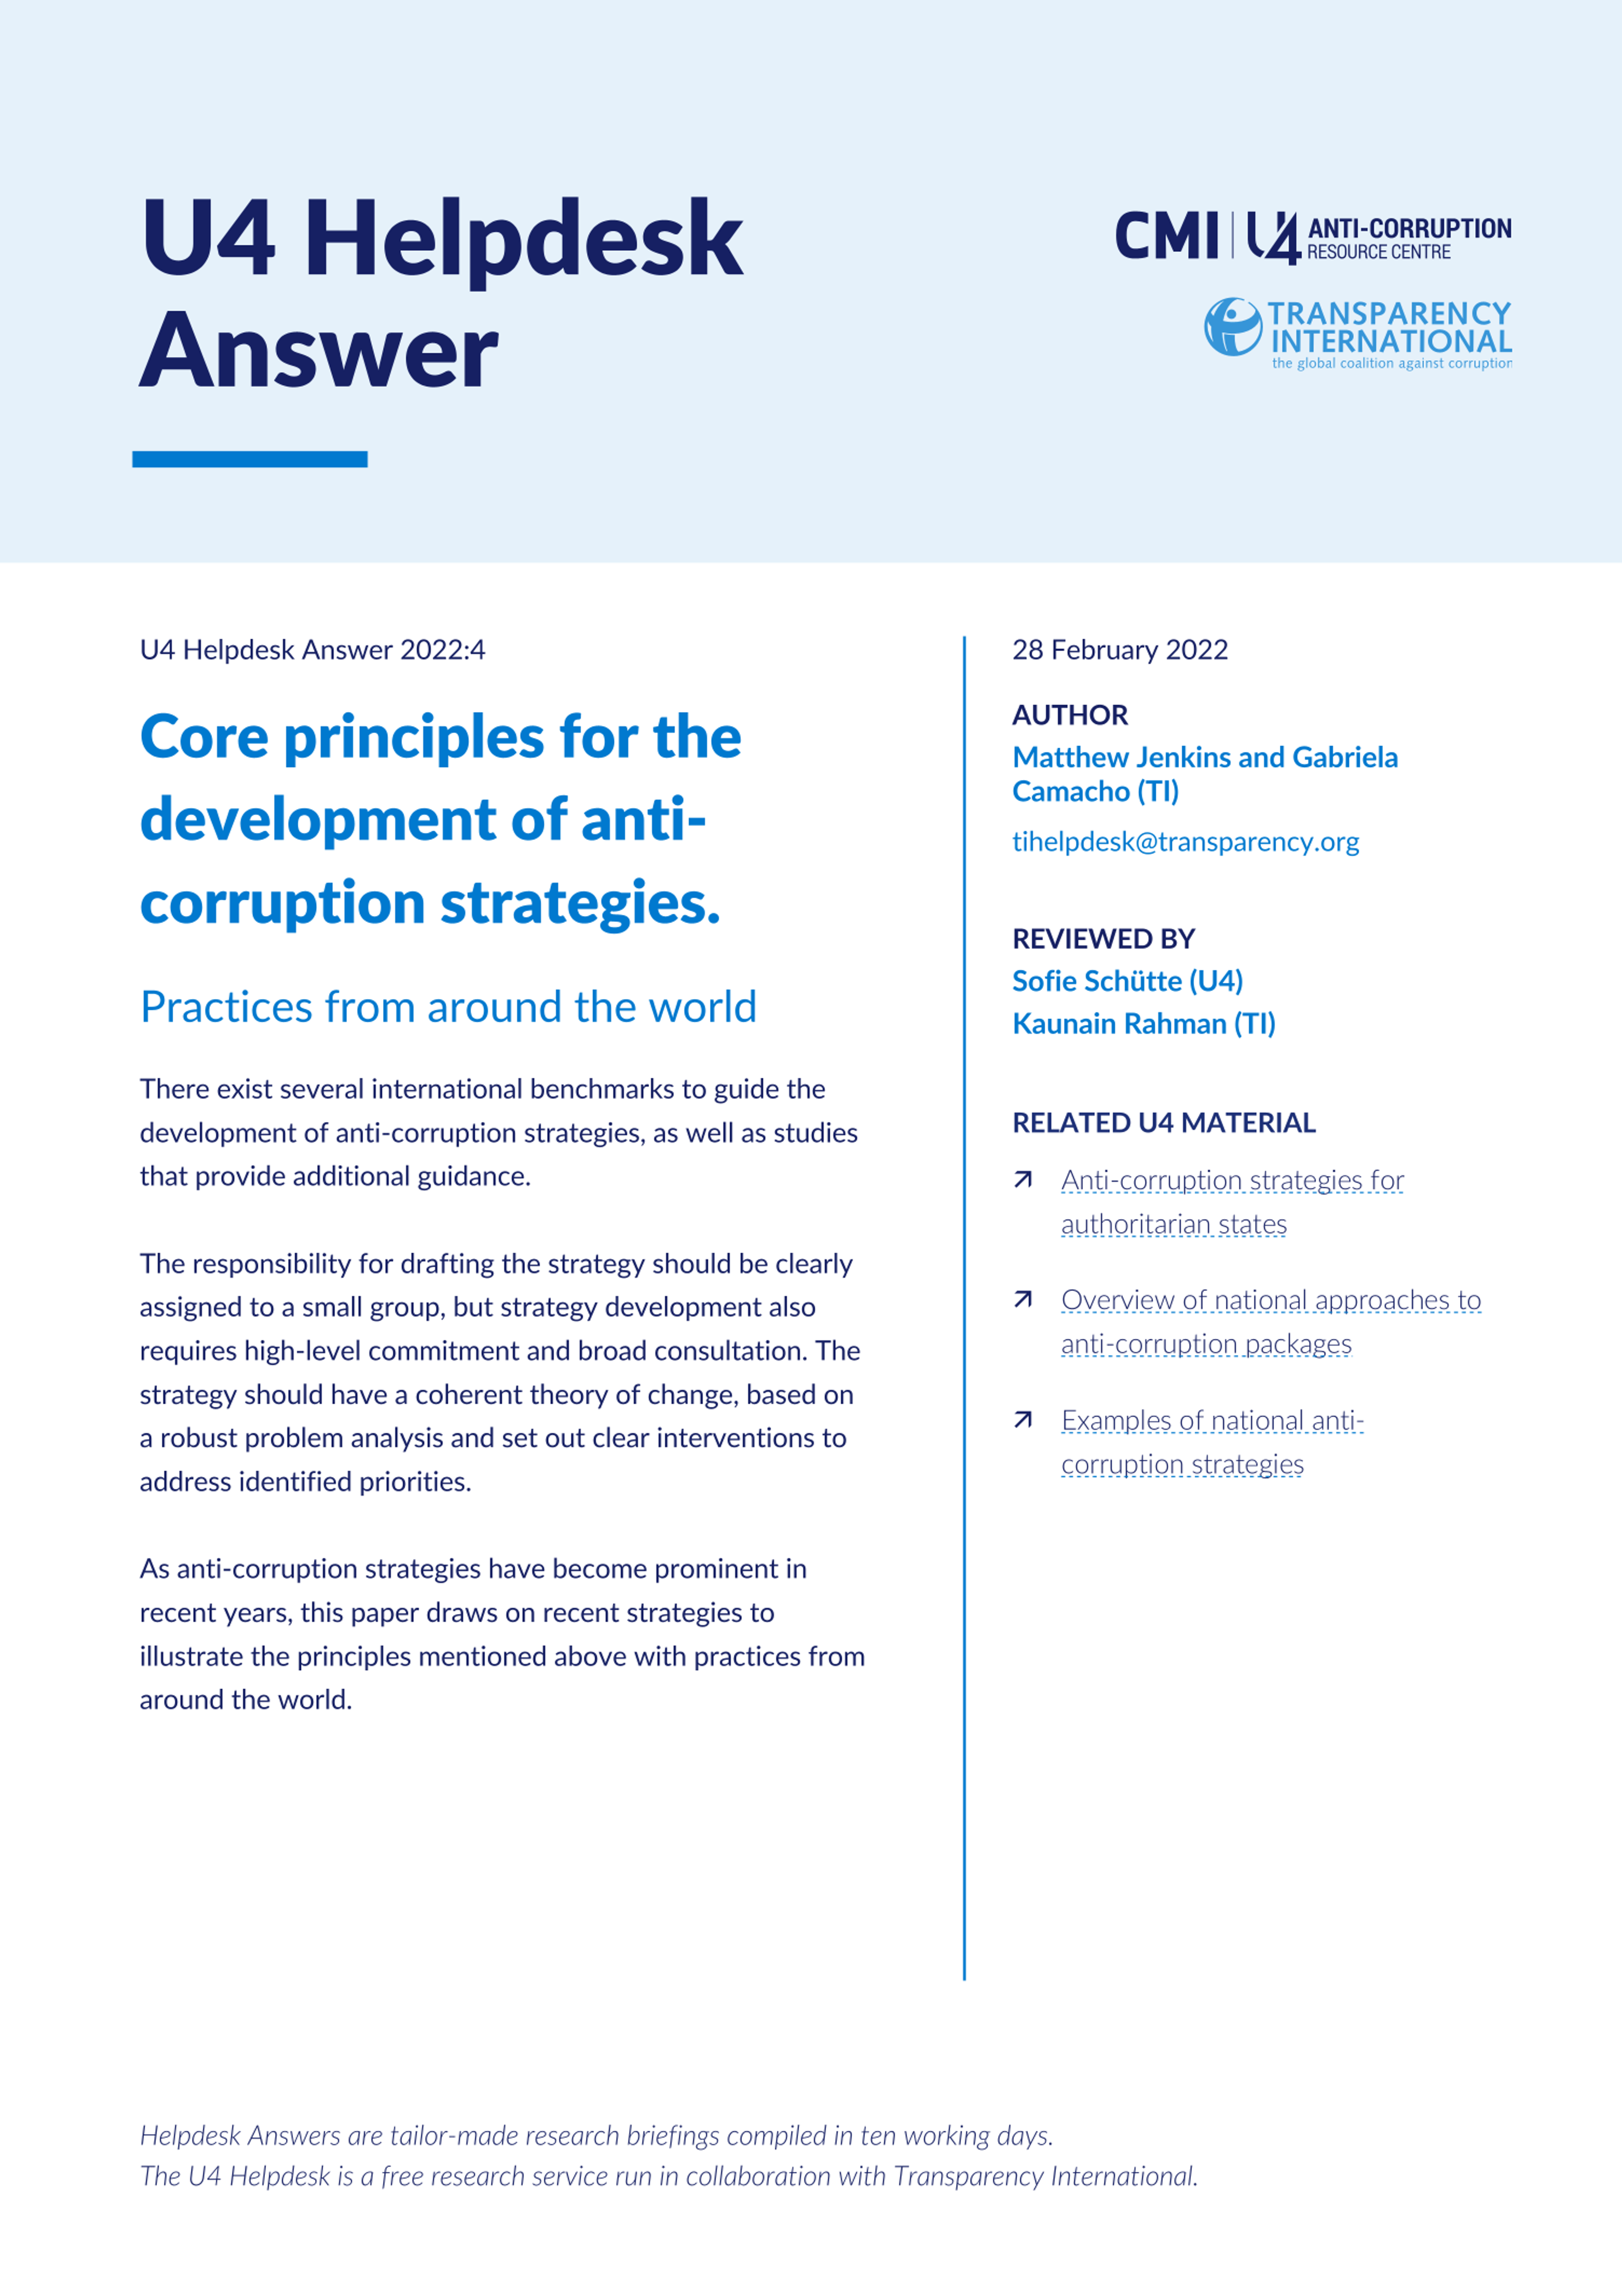 Core principles for the development of anti-corruption strategies.